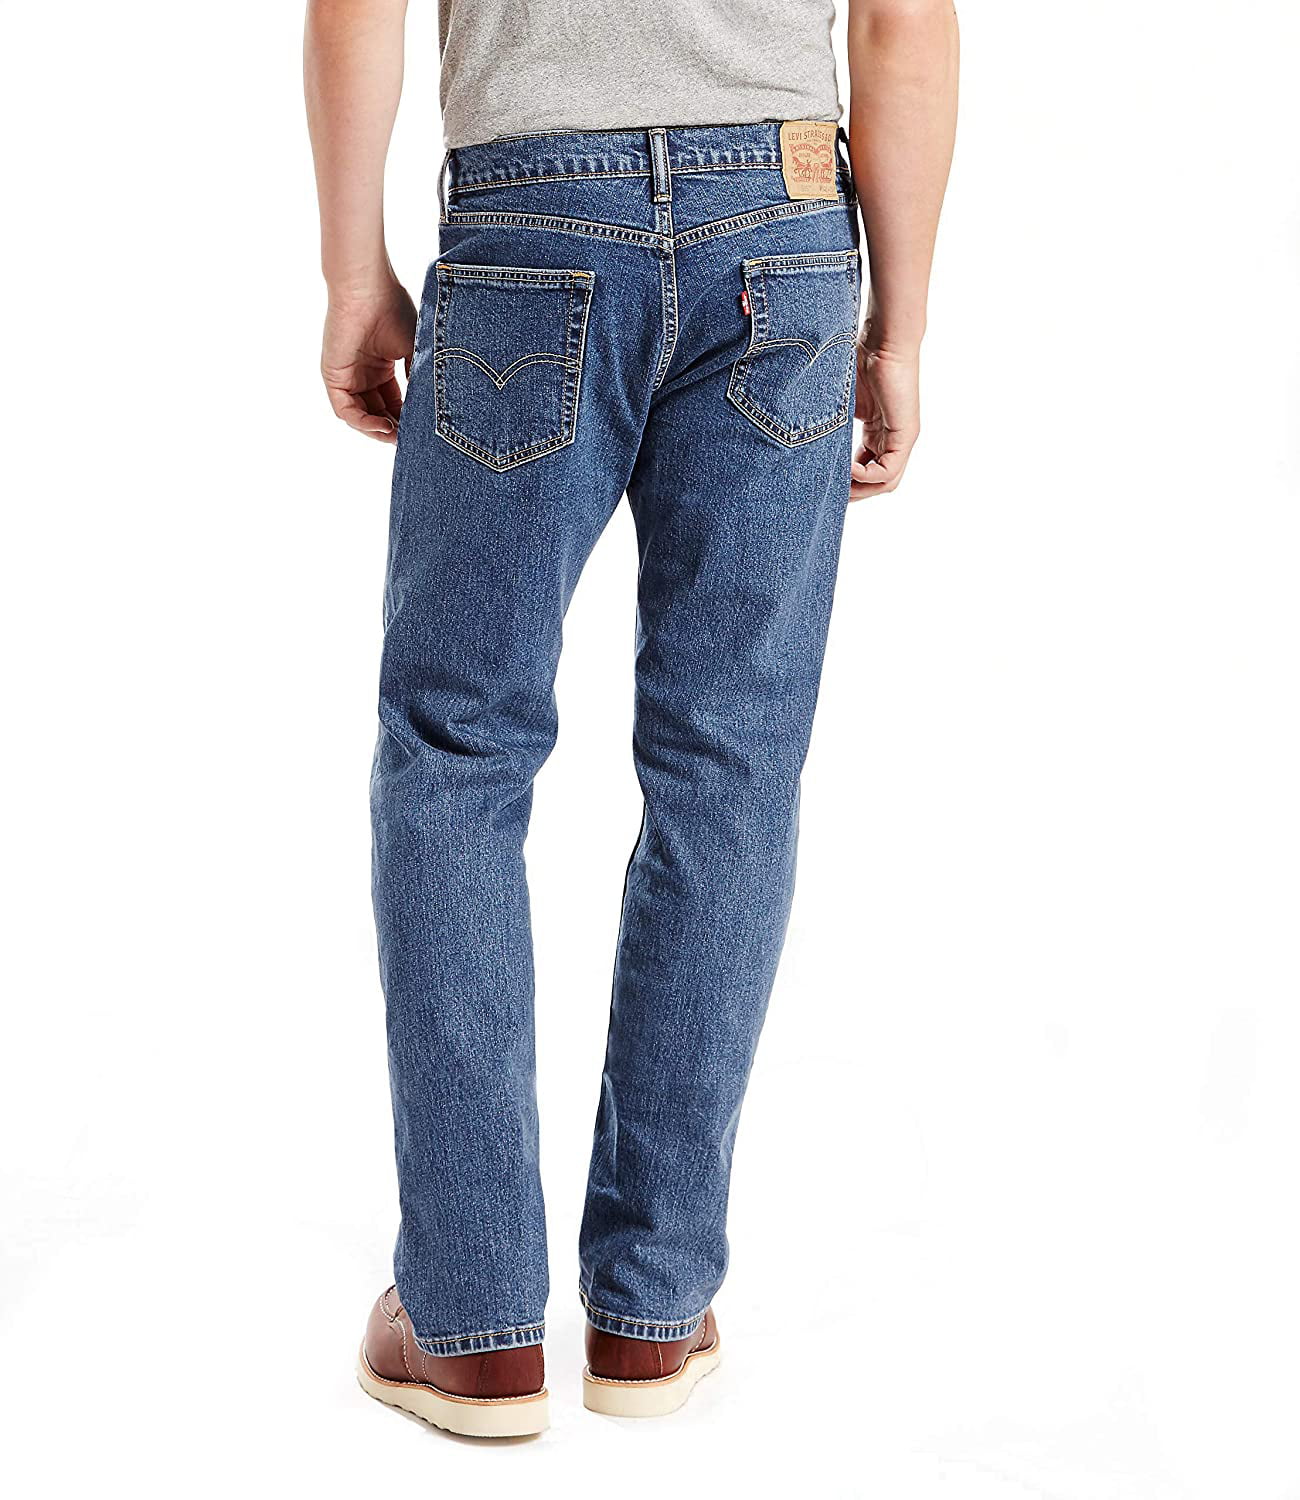 Levi's STONEWASH Men's 505 Straight Regular Fit Stretch Jeans, 34x29 -  